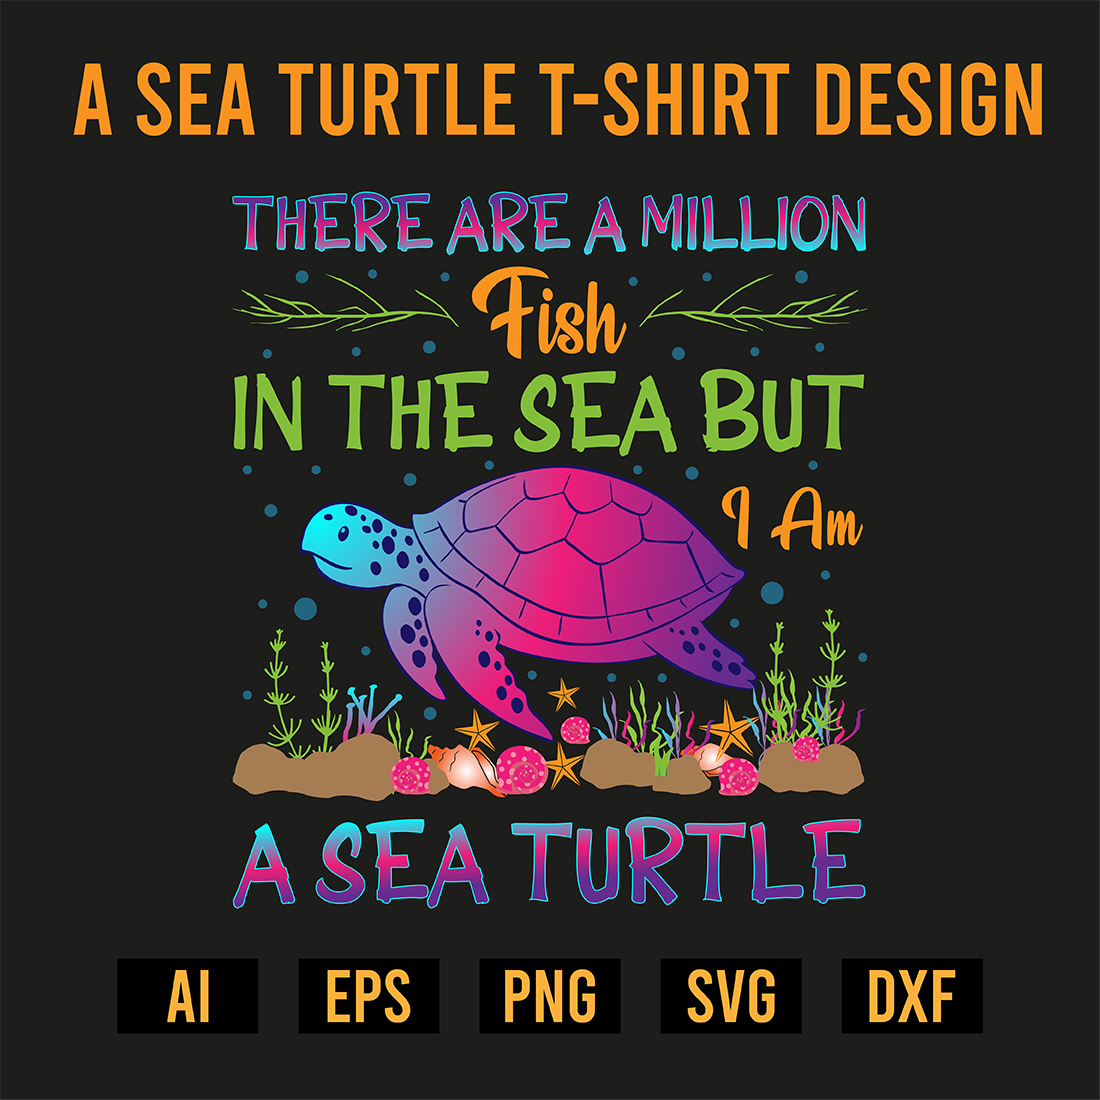 A Sea Turtle T-Shirt Design preview image.